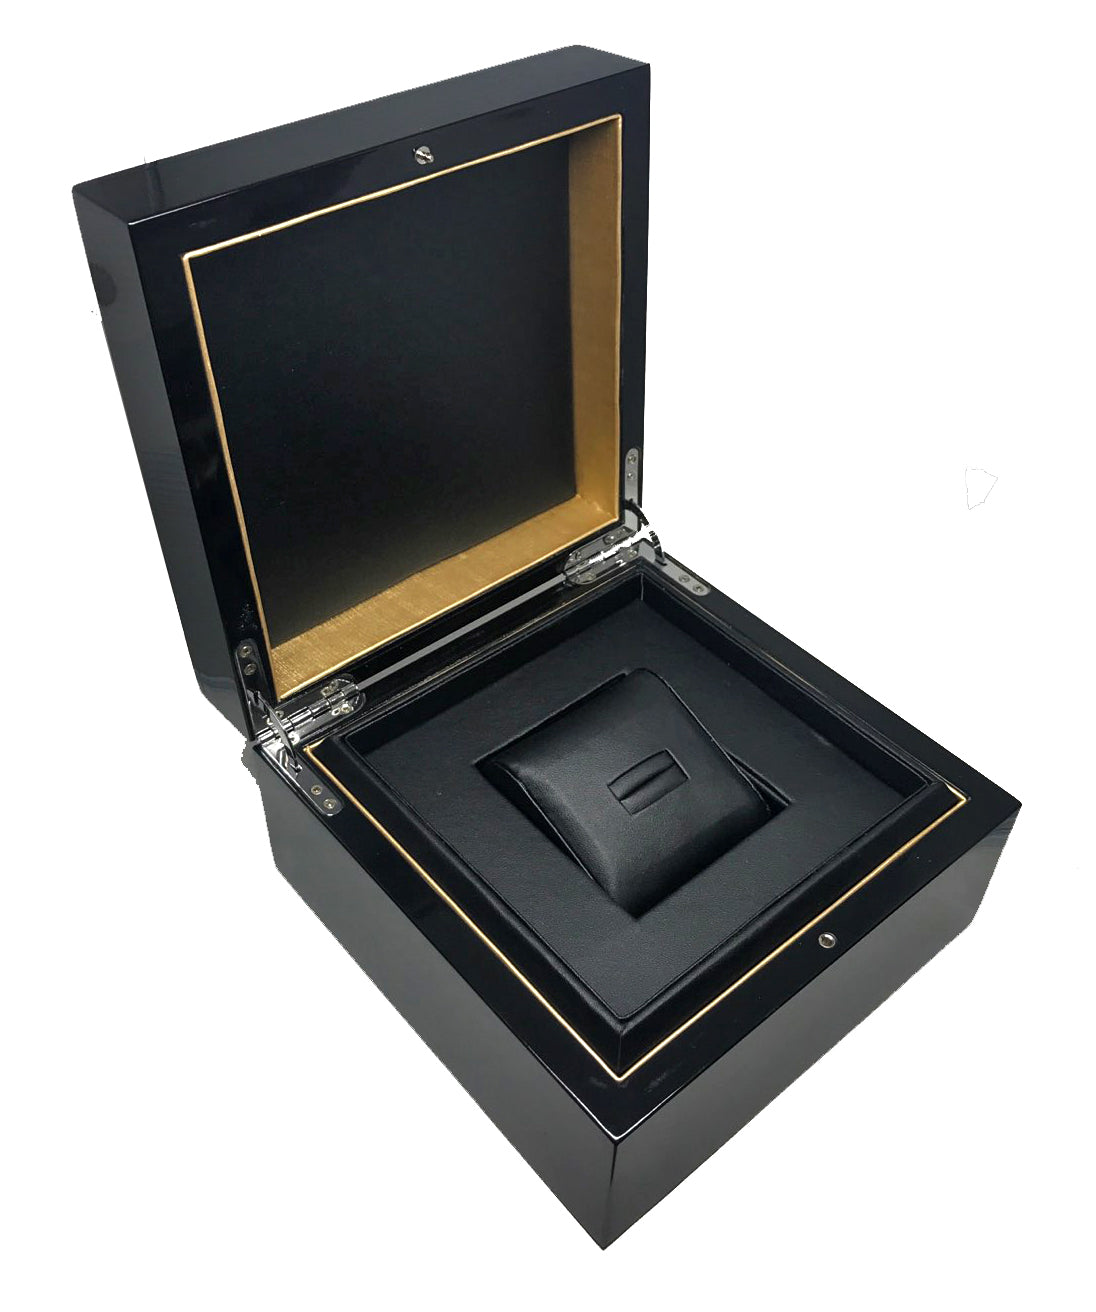 Diplomat "Prestige" Watch Box in Piano Black or Mahogany